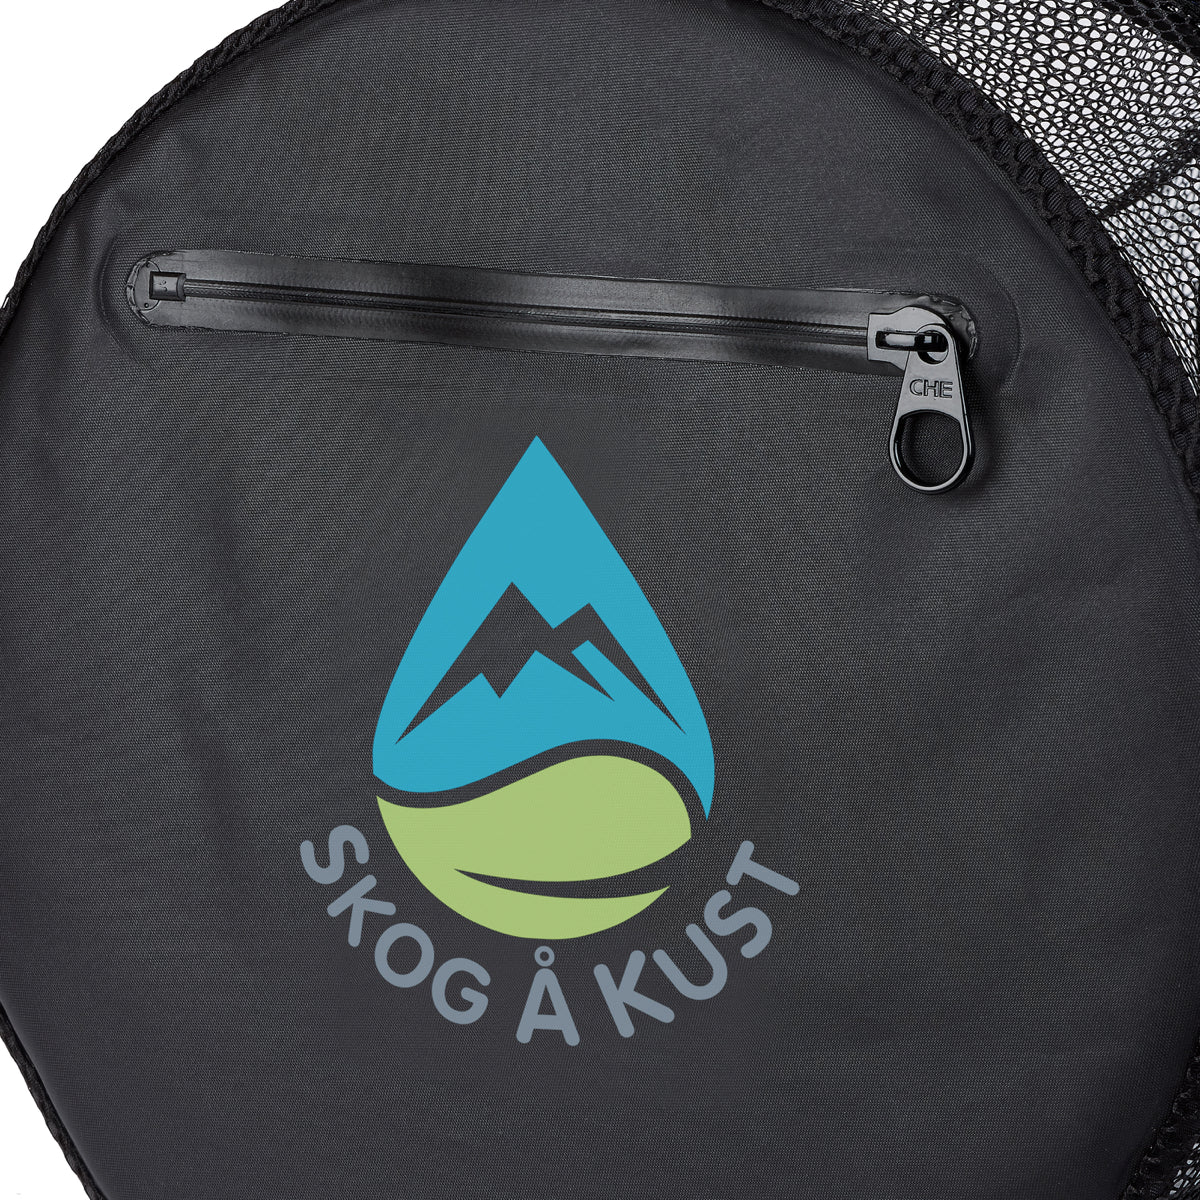 Buy DUFFELSÅK Premium Waterproof Dry Bags Online – Skog Å Kust